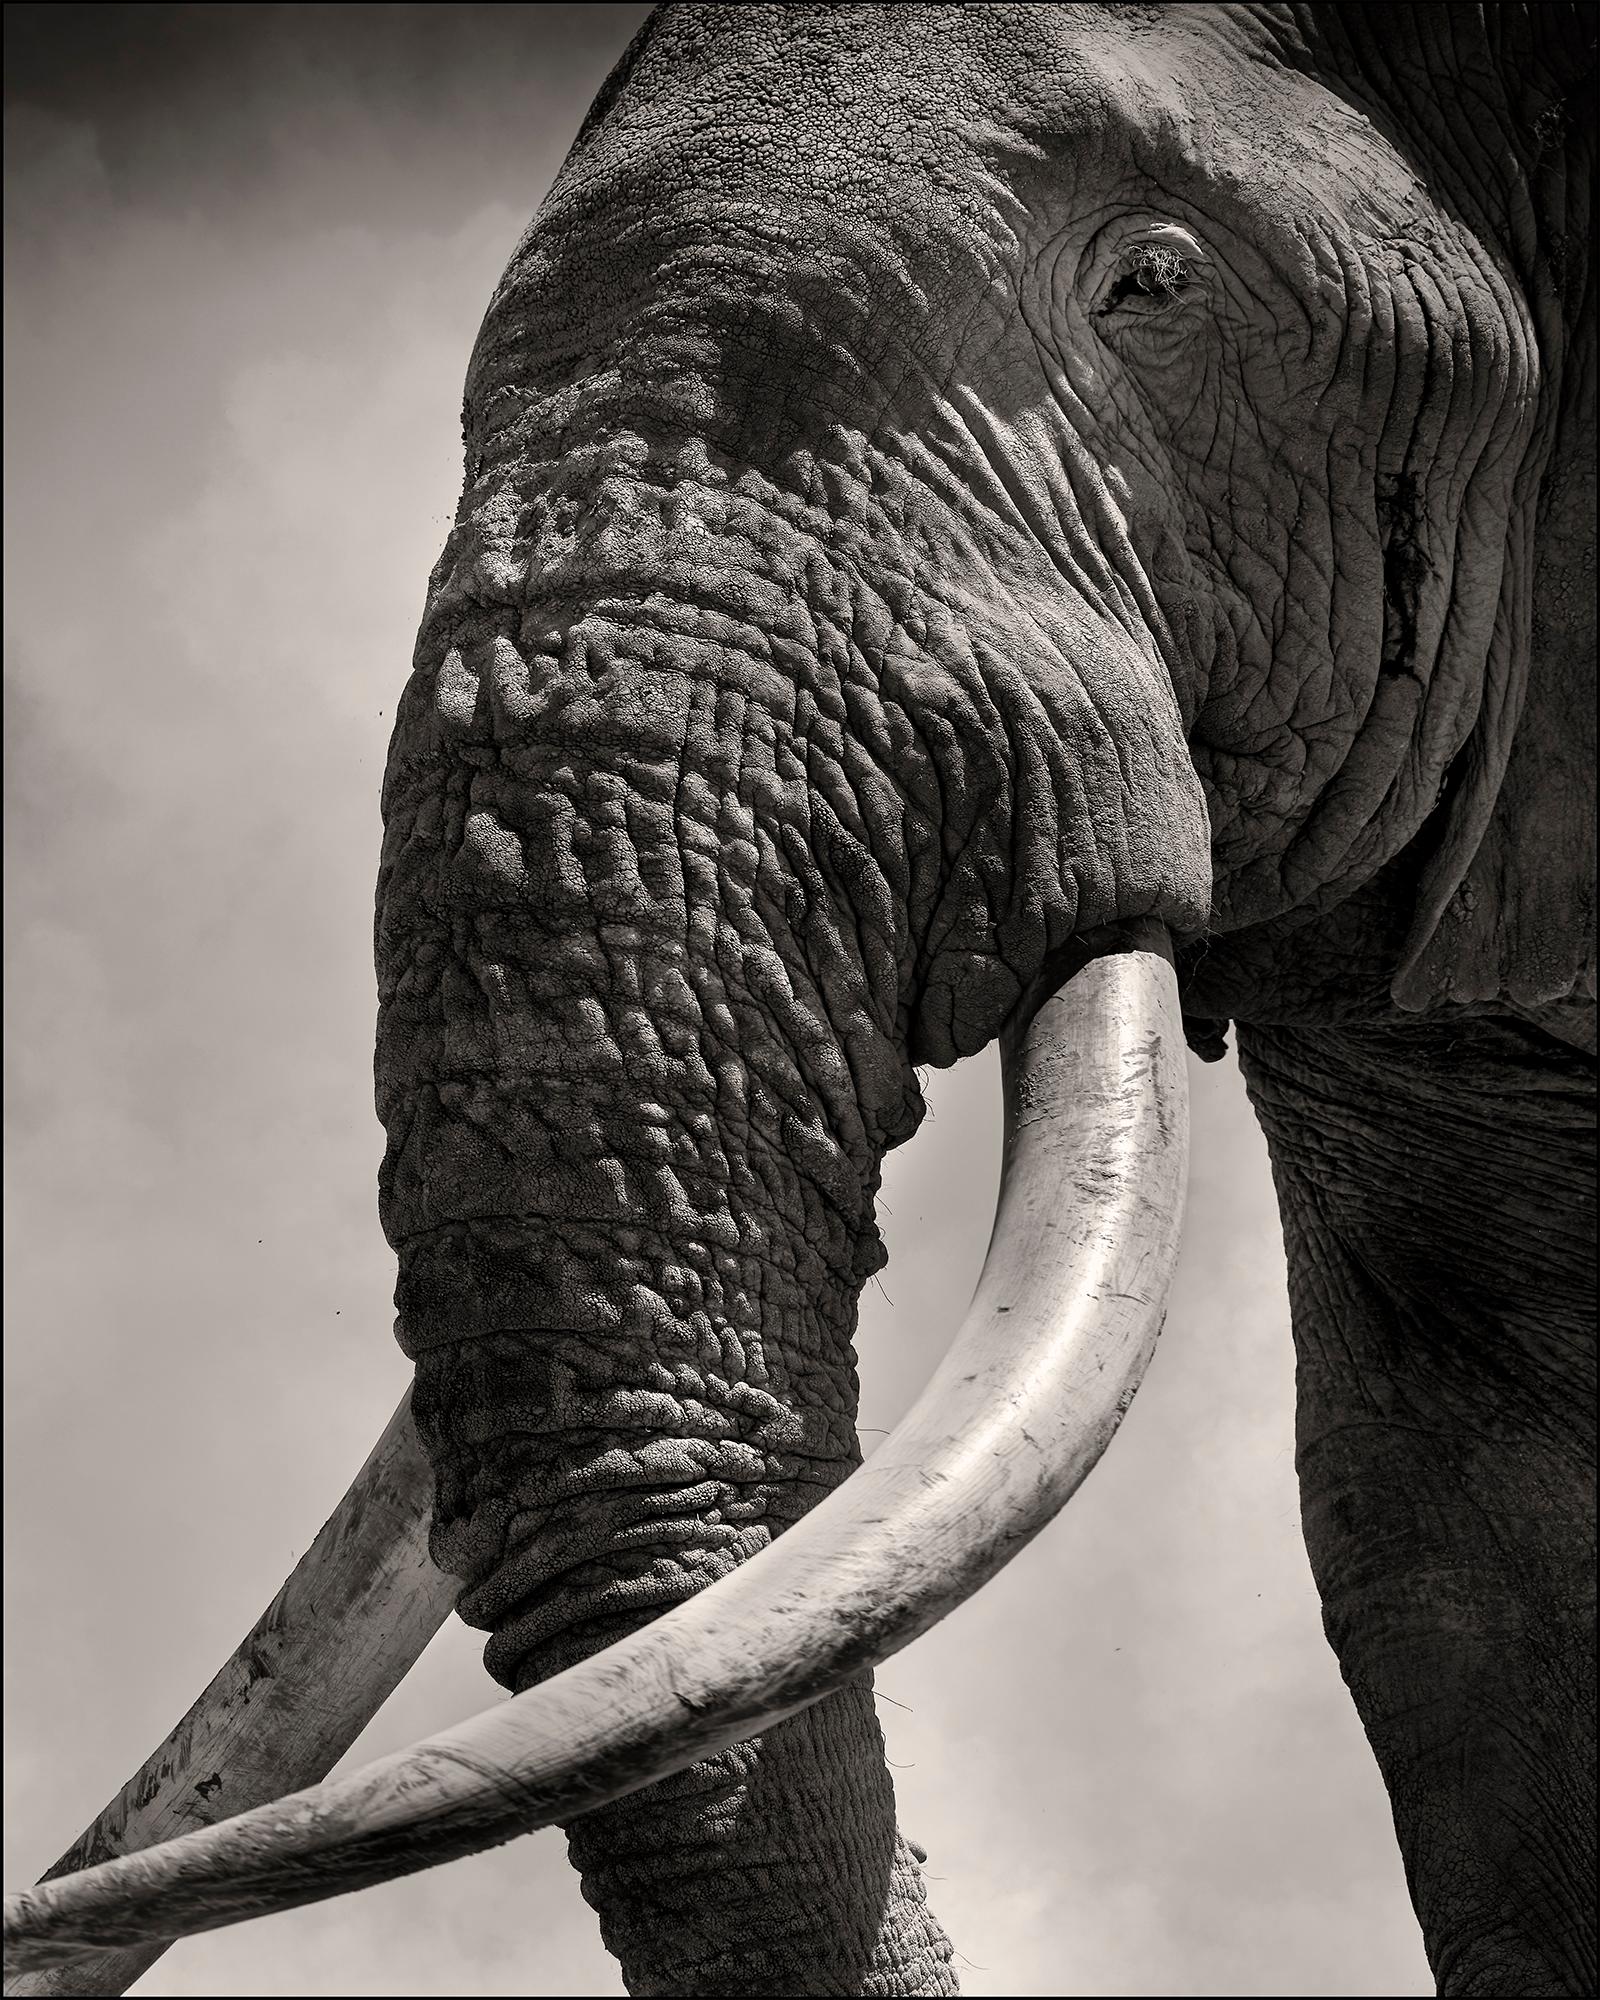 Tim - Eye to Eye, Platinum, animal, elephant, black and white photography - Photograph by Joachim Schmeisser